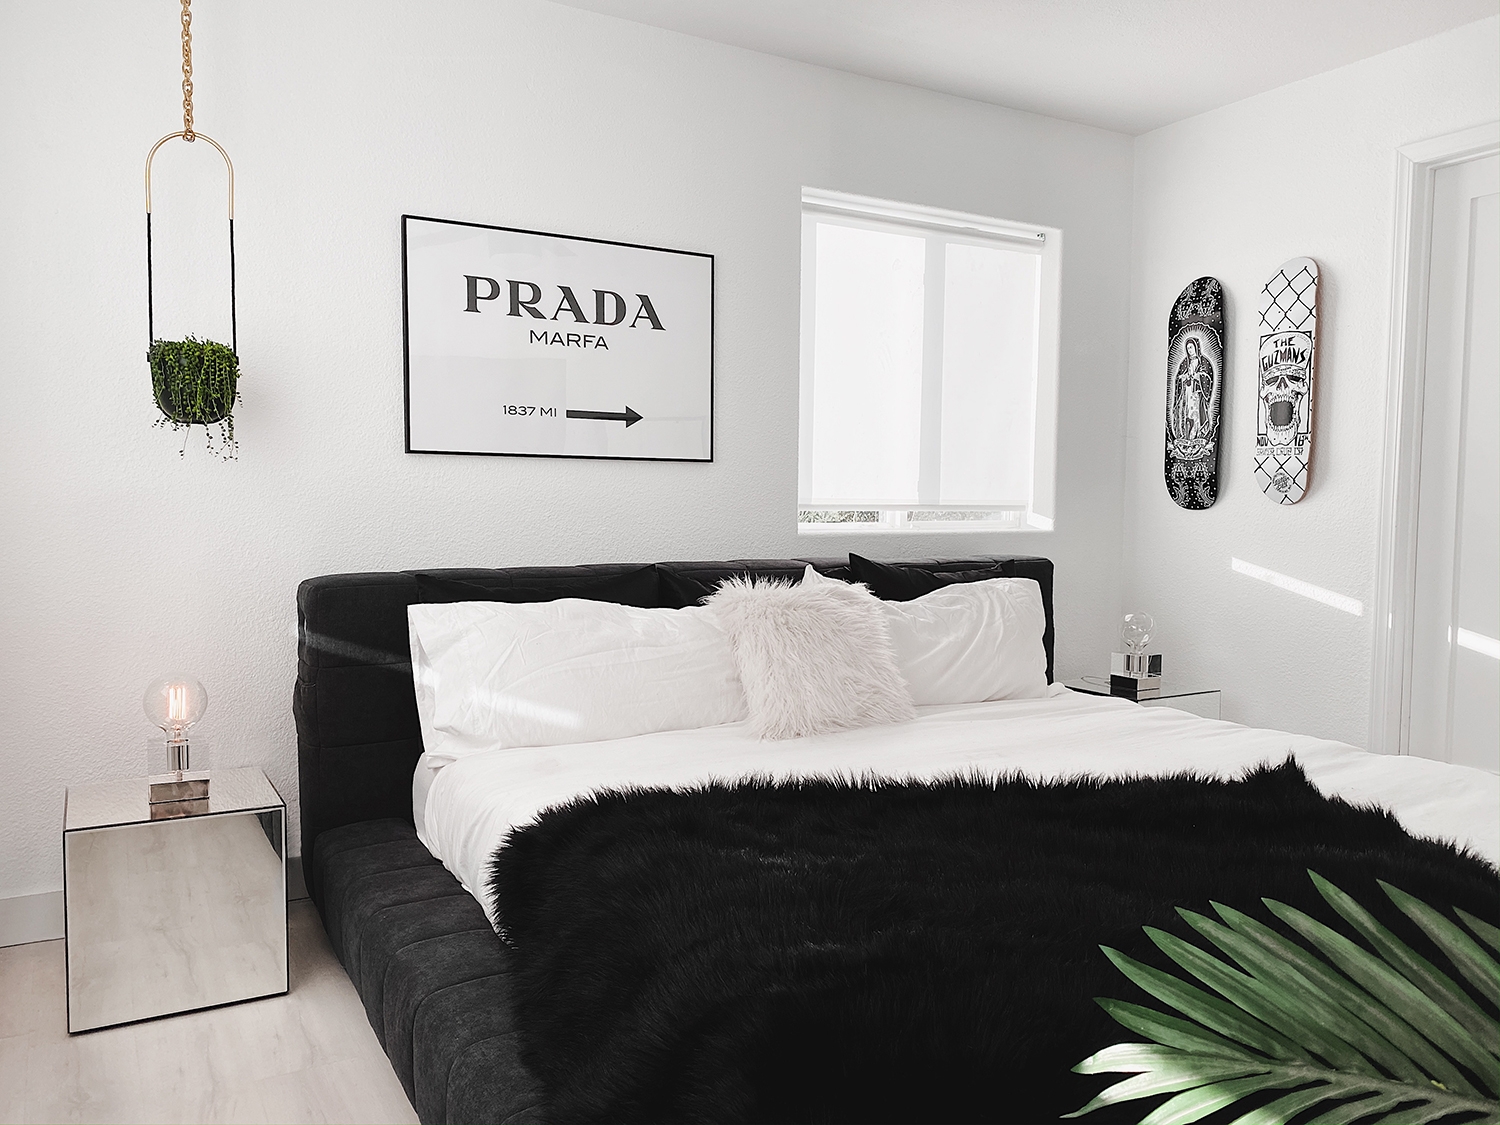 Our Black White Gender Neutral Master Bedroom